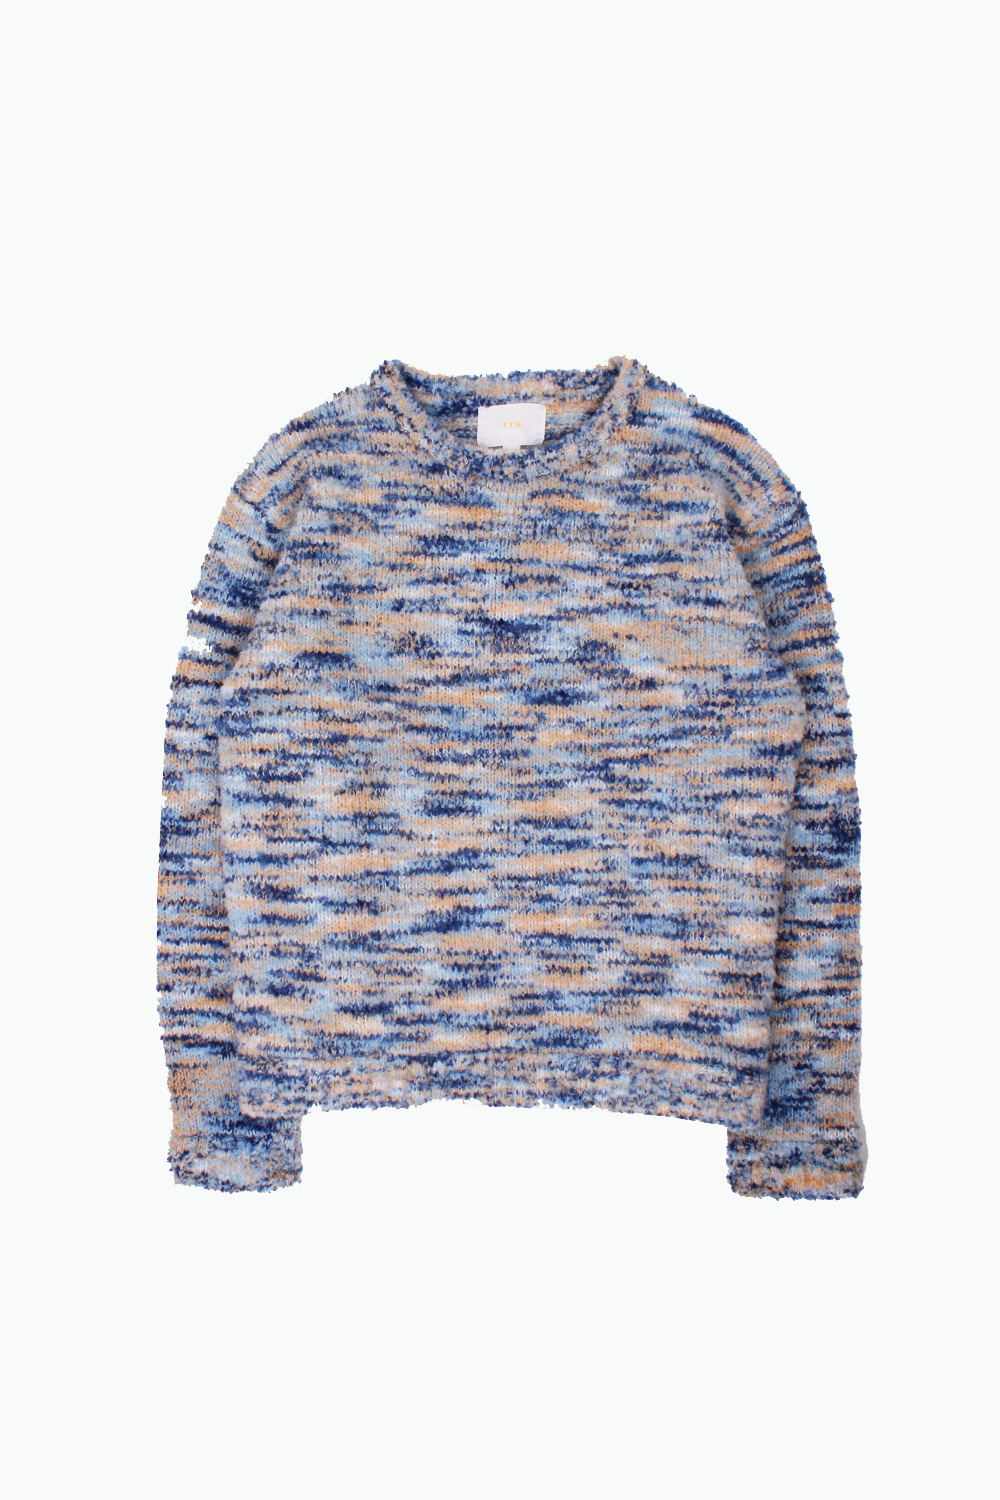 The Starry Night Sweater